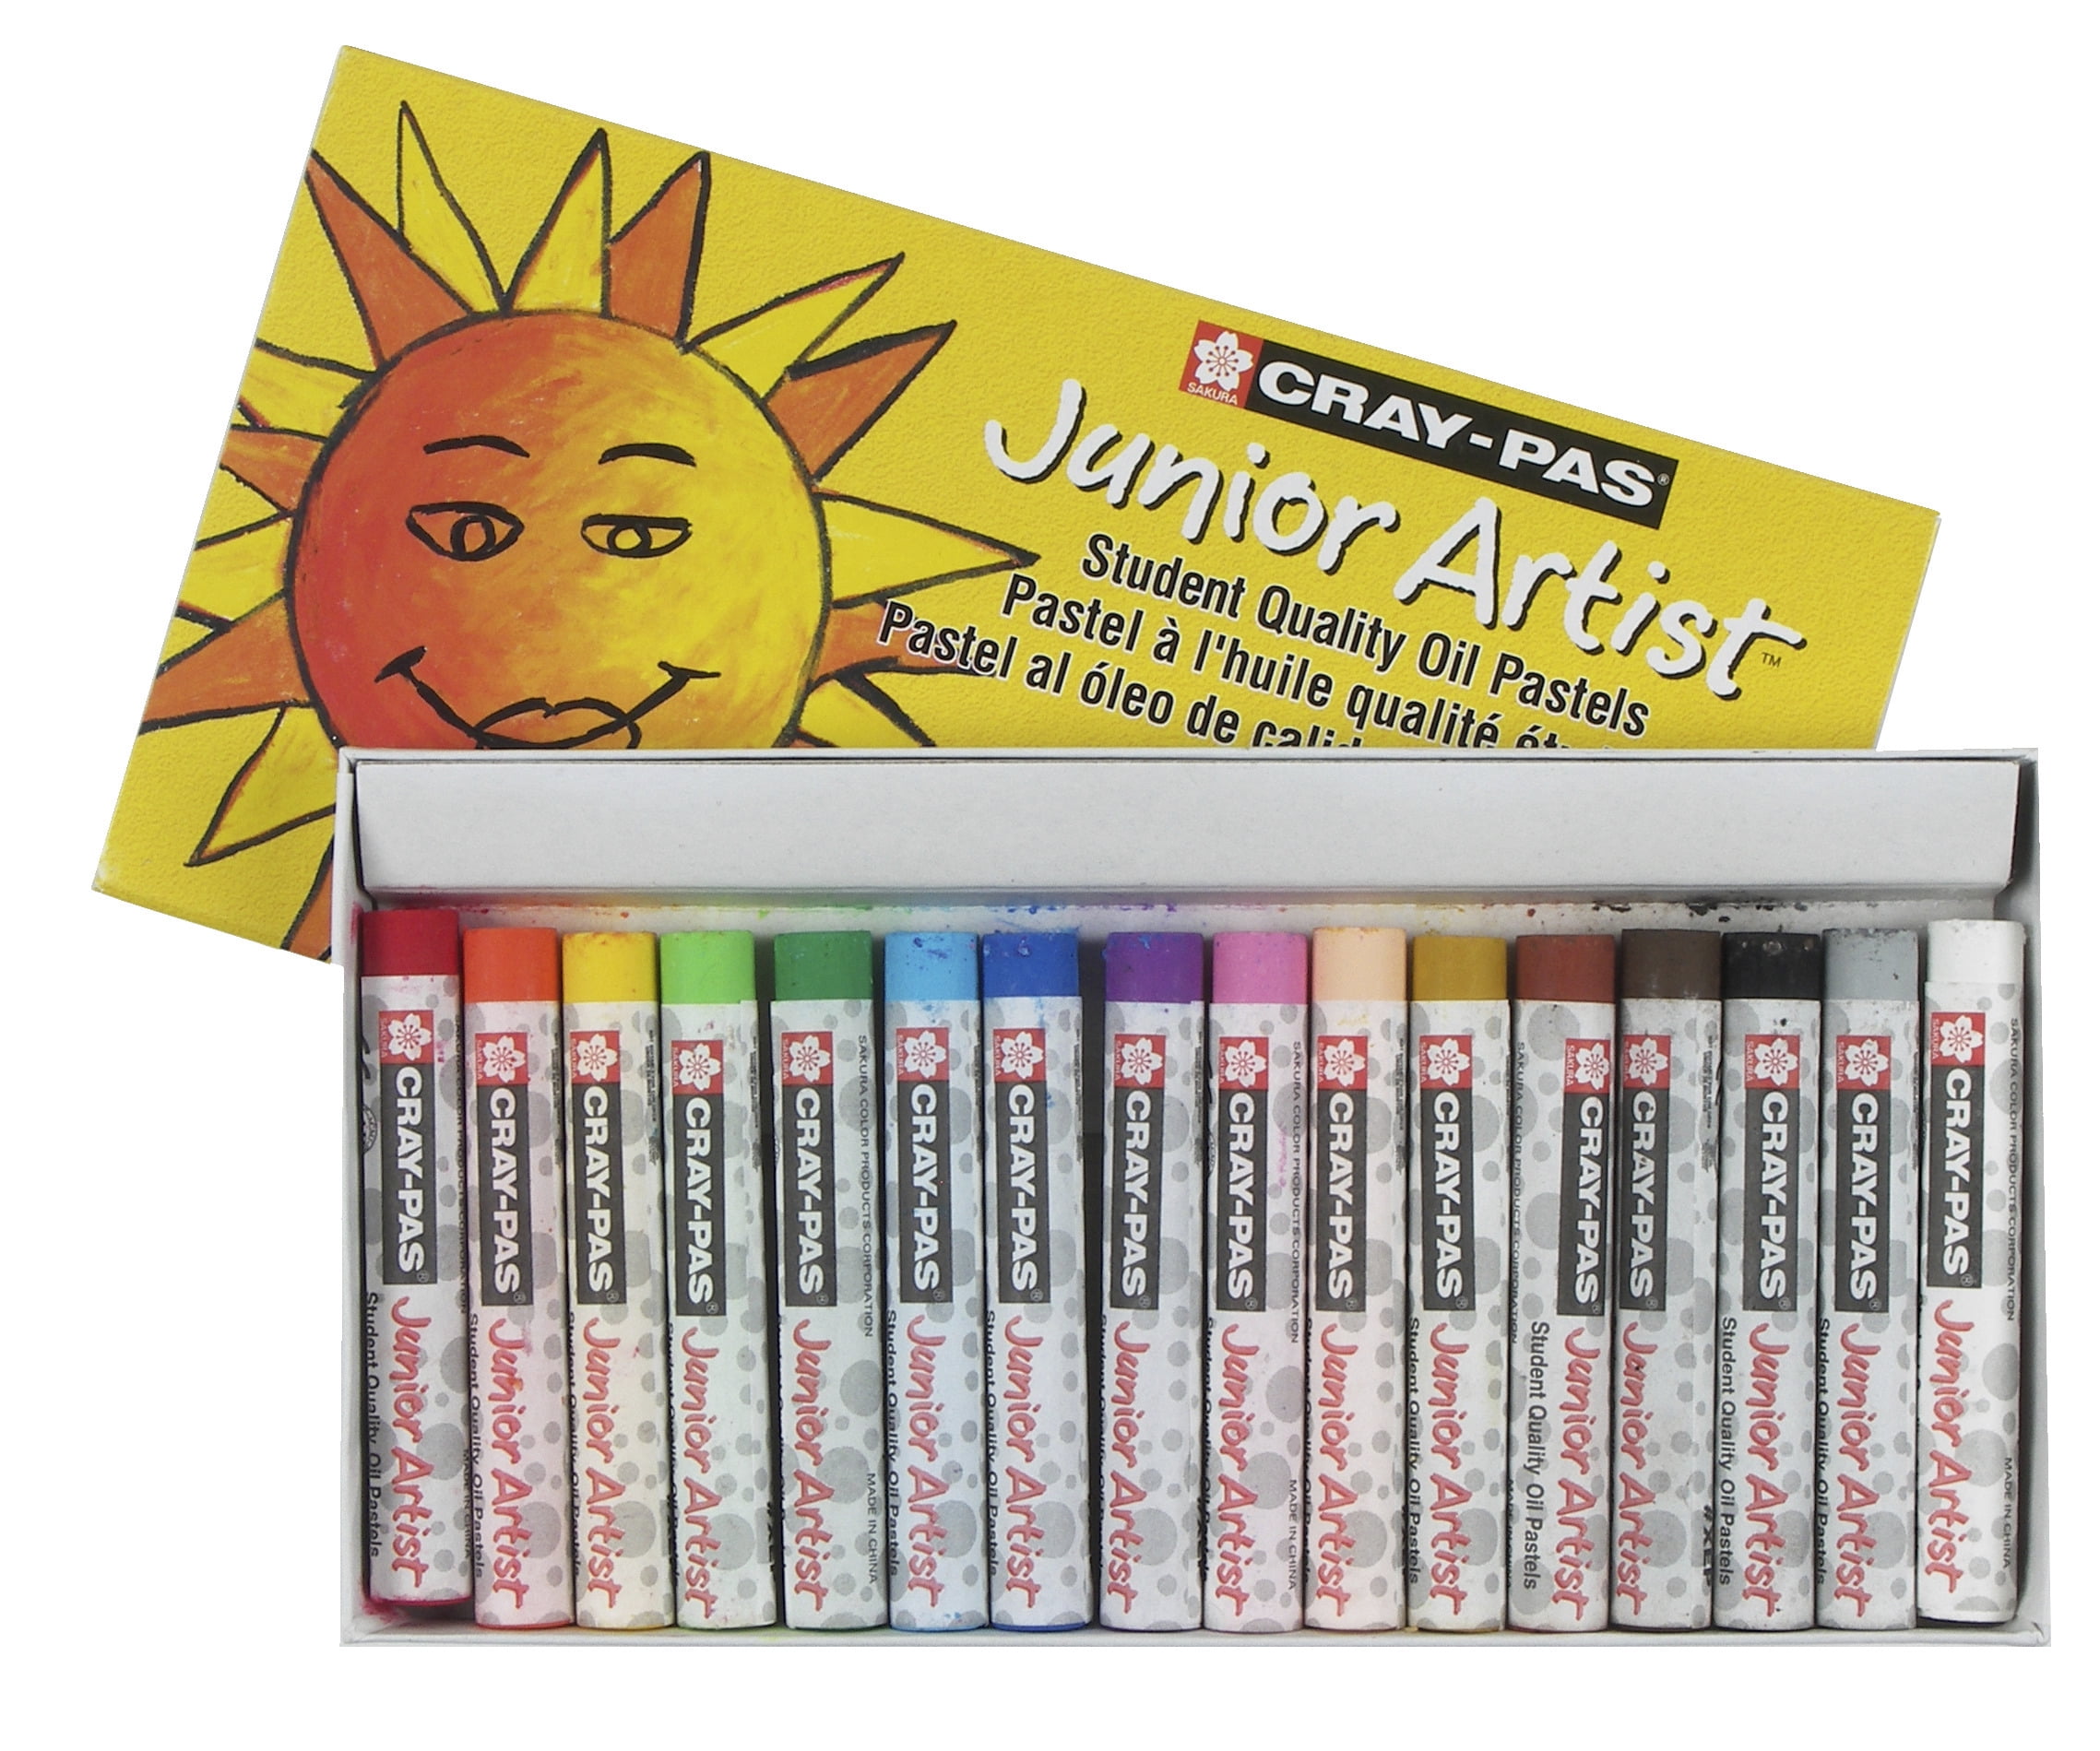 Cray-pas oil pastel crayons vintage 80s 2 sets of 16 colors blendable Sakura